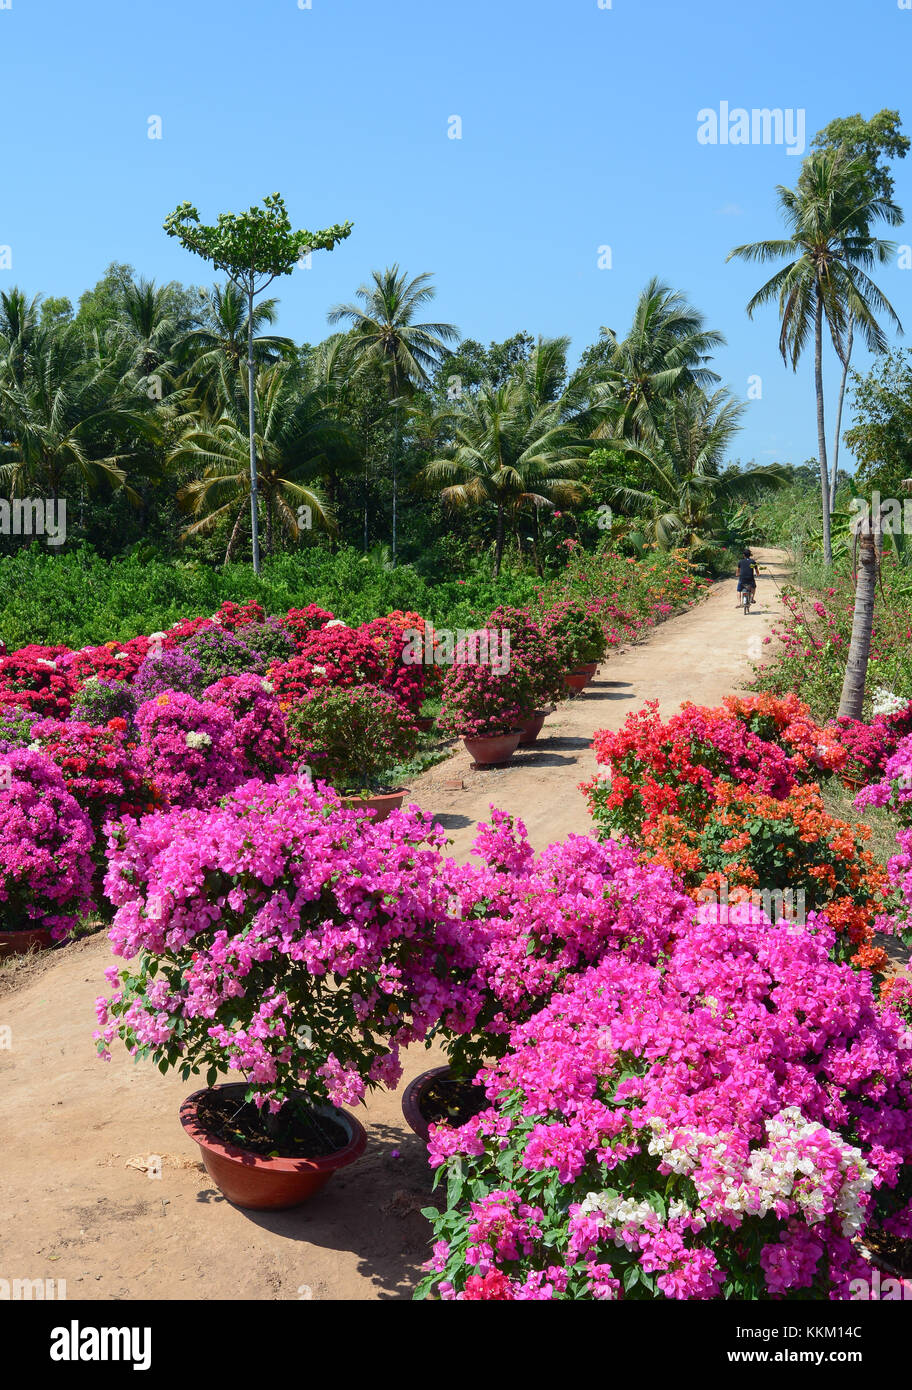 Bougainvillea flower plantation at sunny day in Mekong Delta, Vietnam. Stock Photo